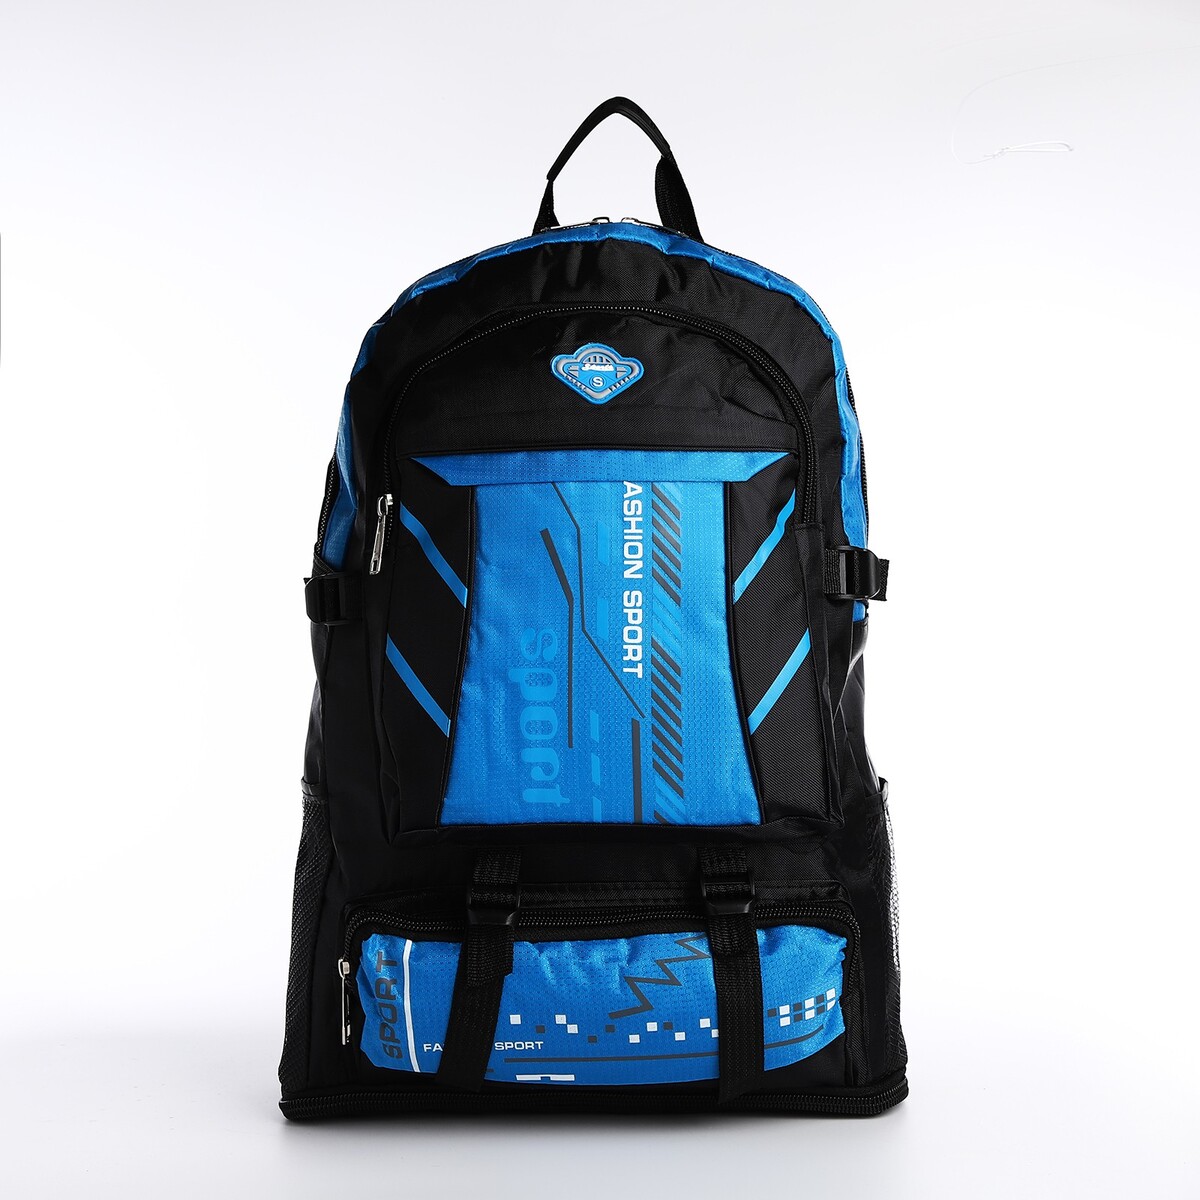 Рюкзак на молнии с увеличением, 65л, 4 наружных кармана, цвет синий